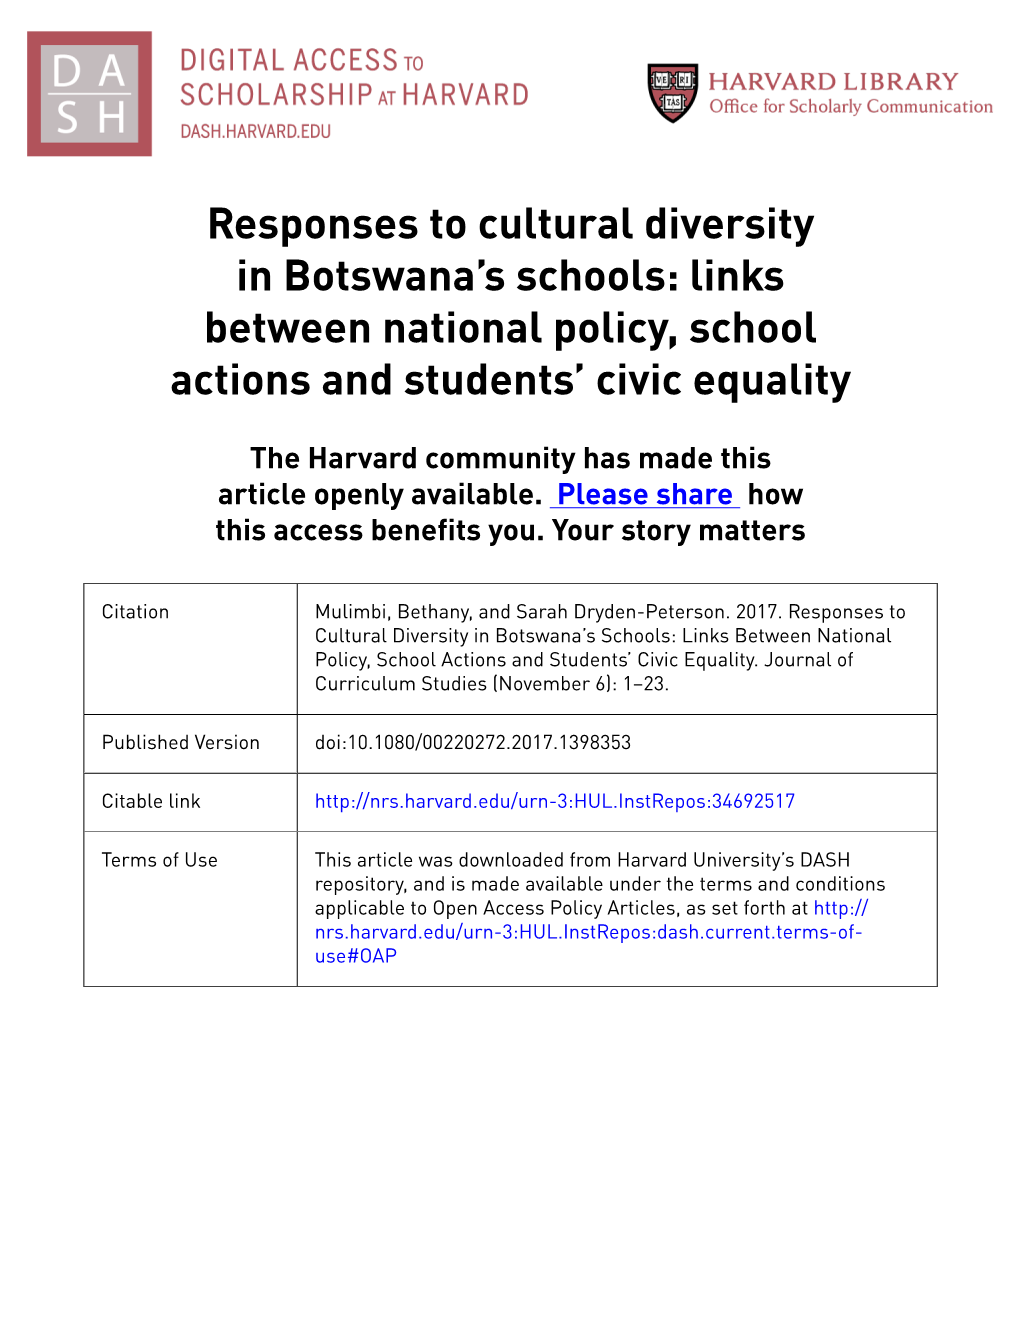 Responses to Cultural Diversity in Botswana's Schools